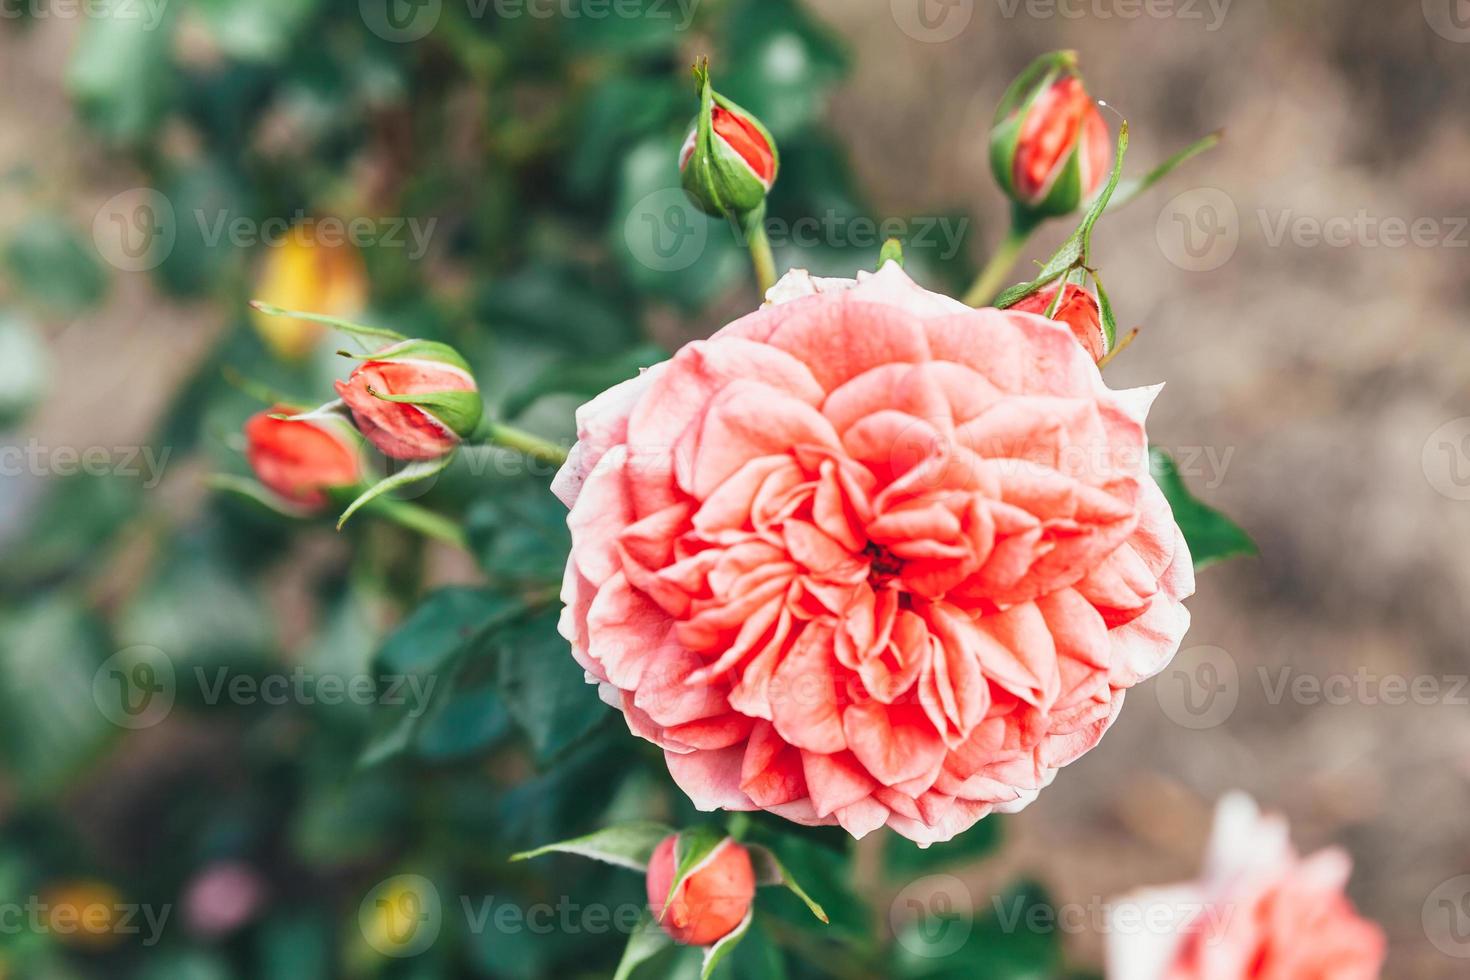 hermosas flores de rosa rosa en verano. fondo de naturaleza con rosas rojas  florecientes. inspirador fondo